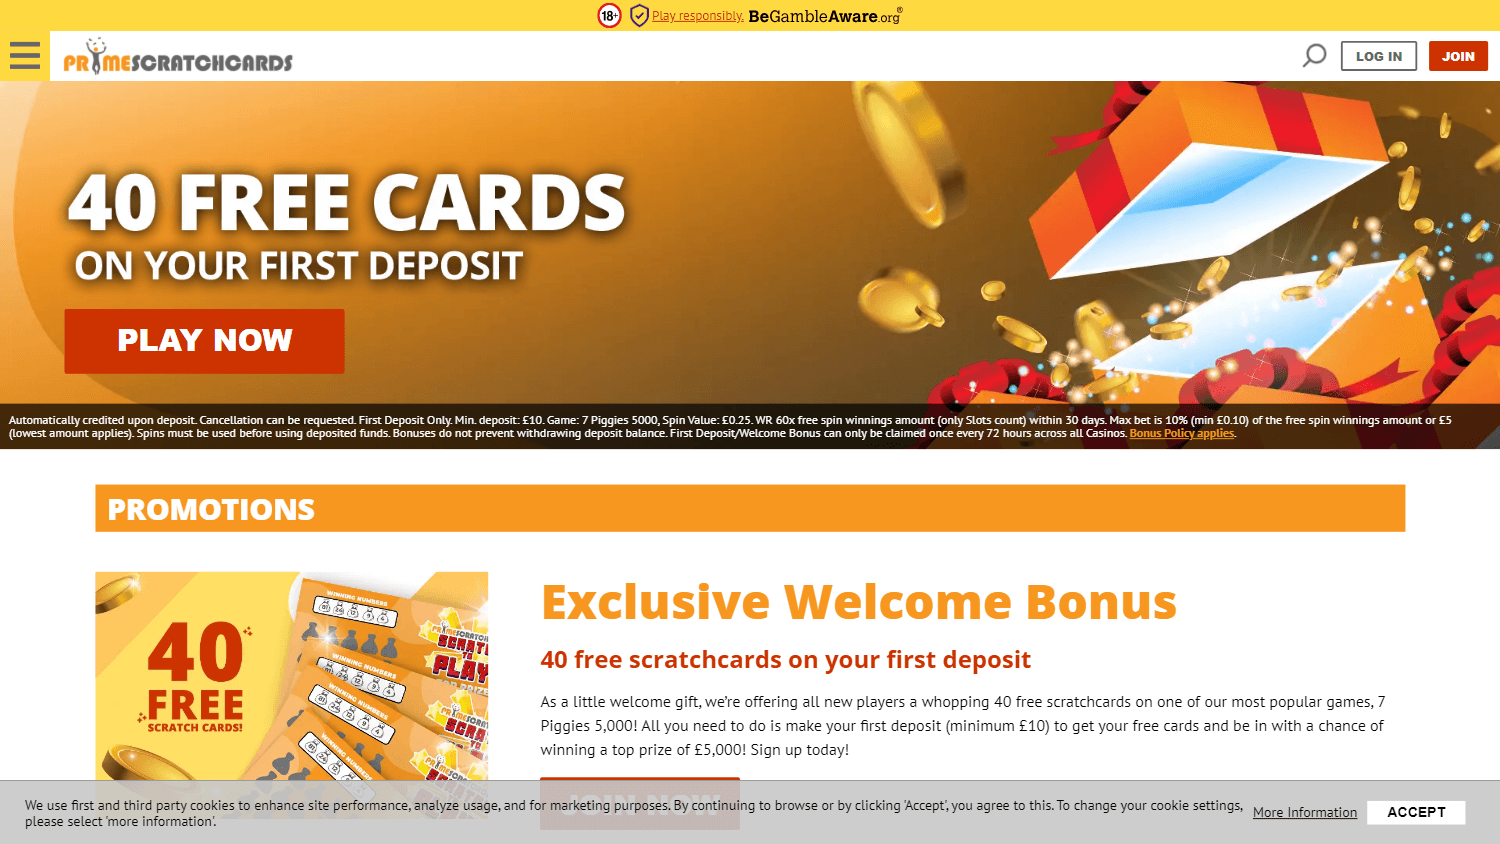 primescratchcards_casino_uk_promotions_desktop